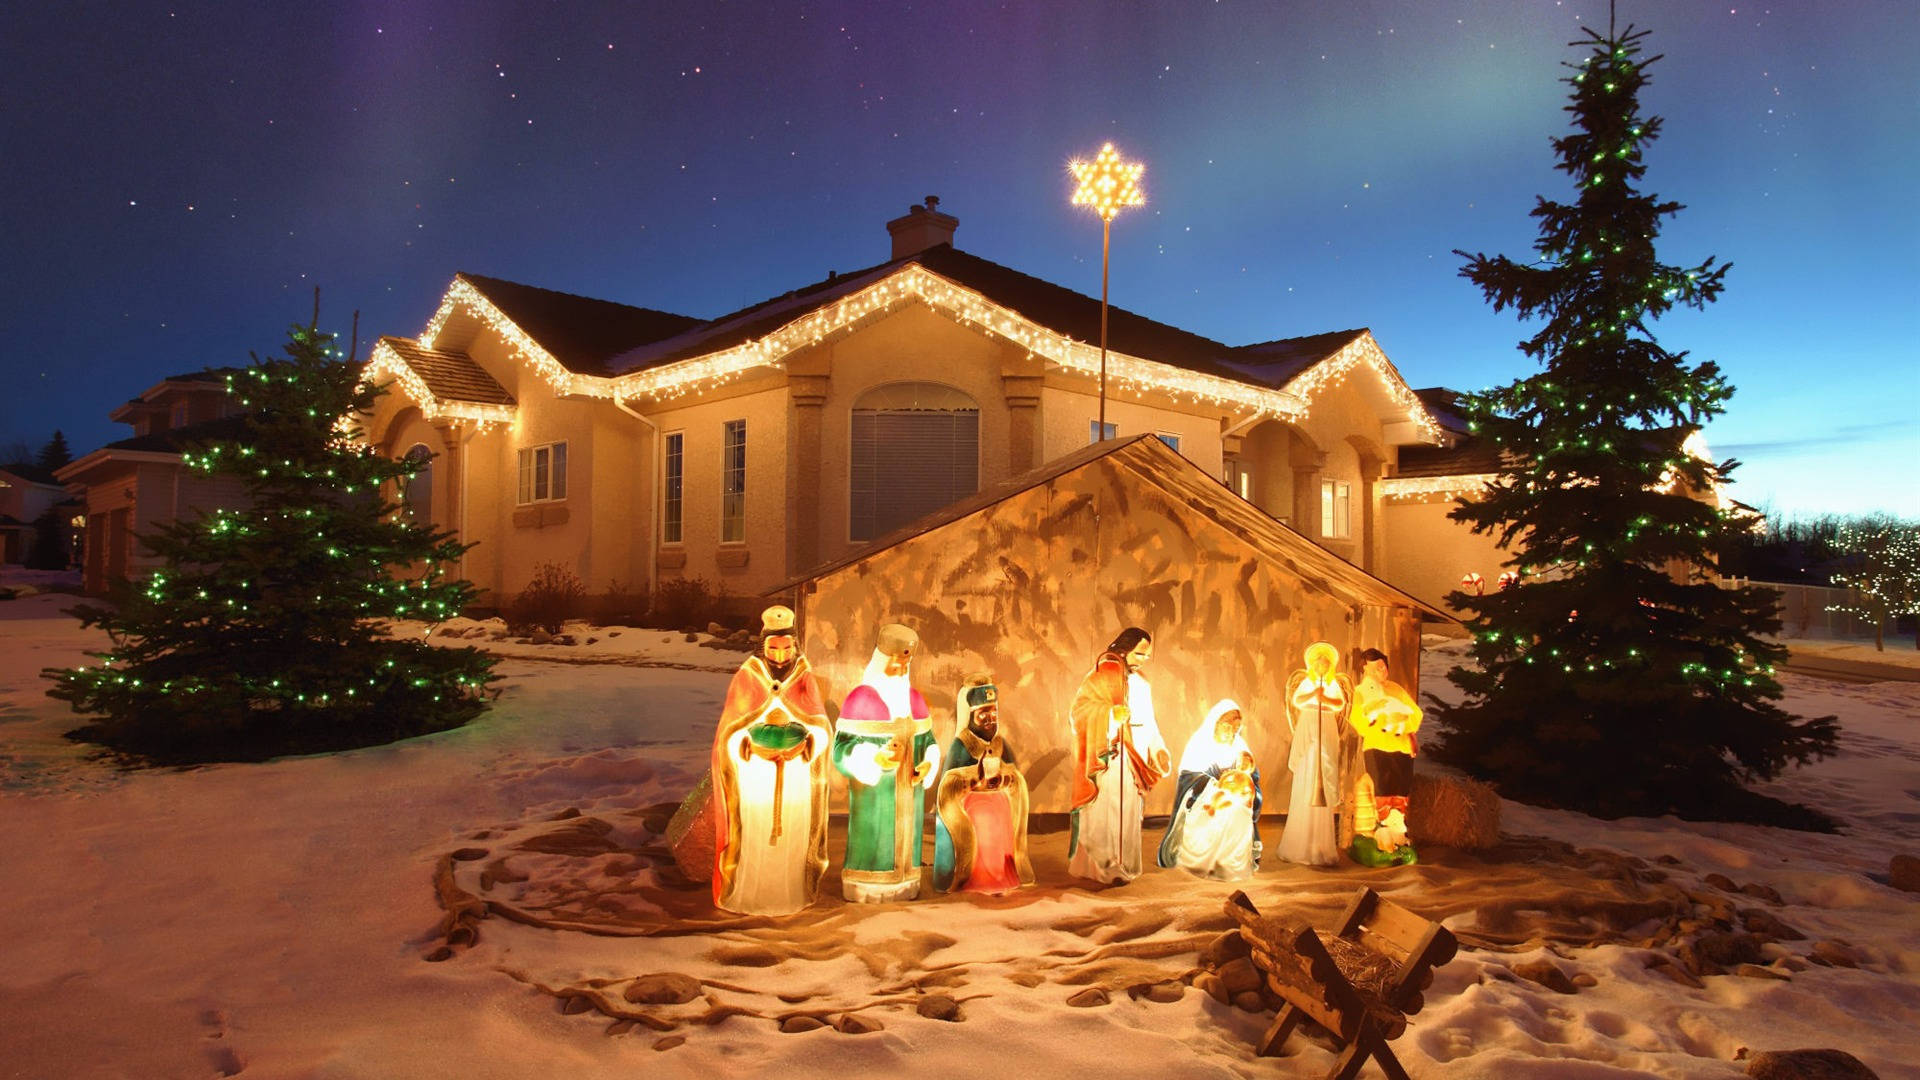 Download Outdoor Christmas Decoration Nativity Scene Wallpaper | Wallpapers .com